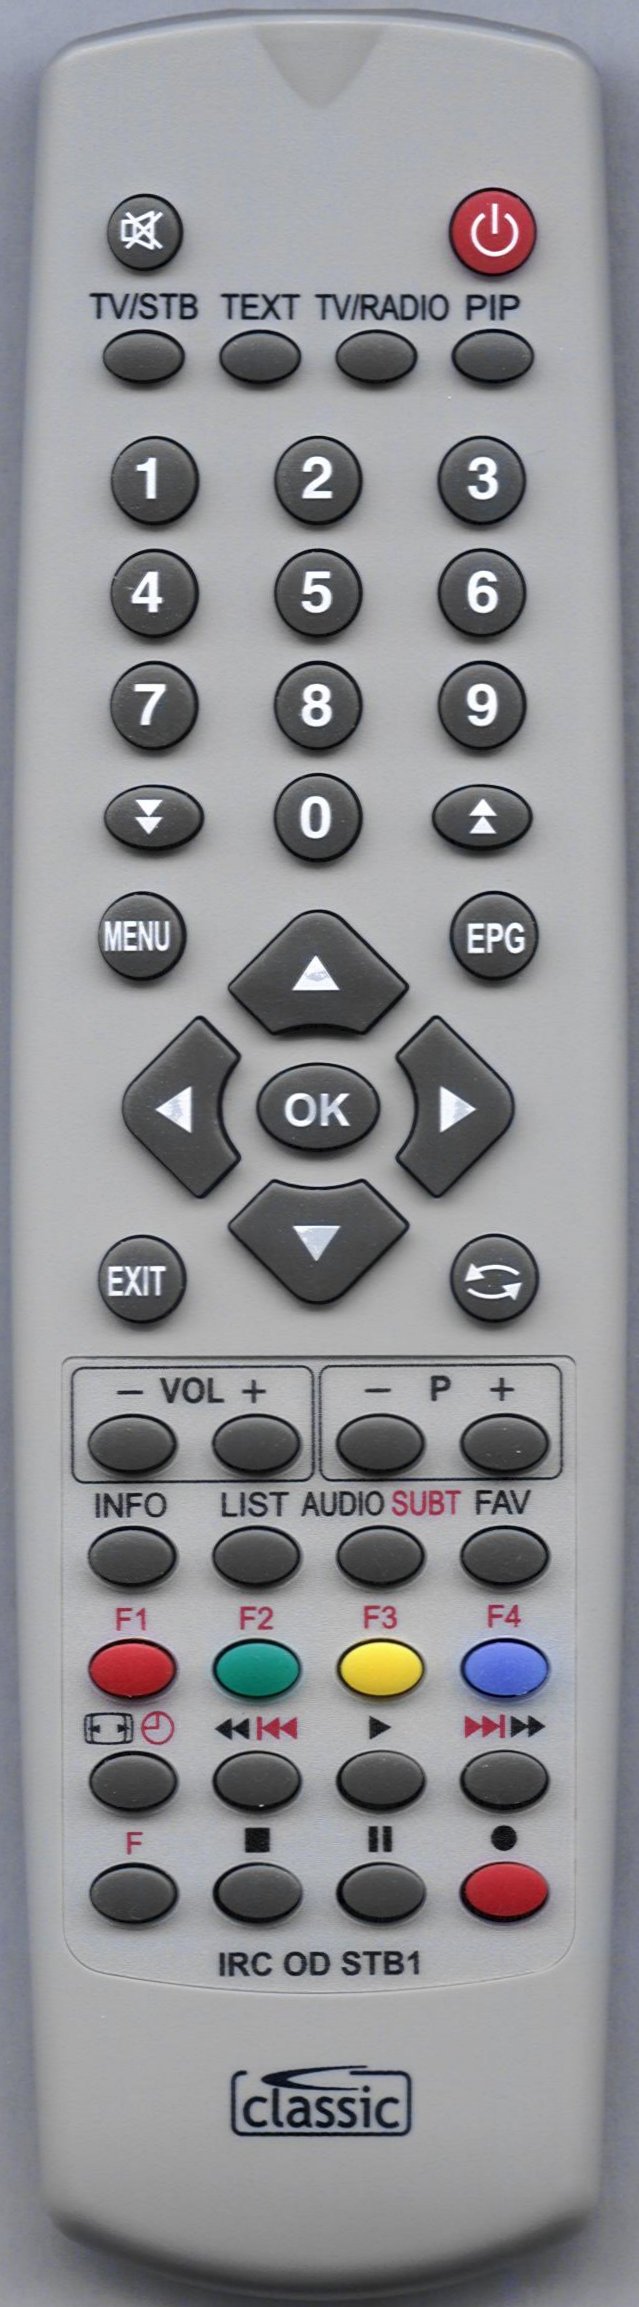 TRIAX DVB 260S Remote Control